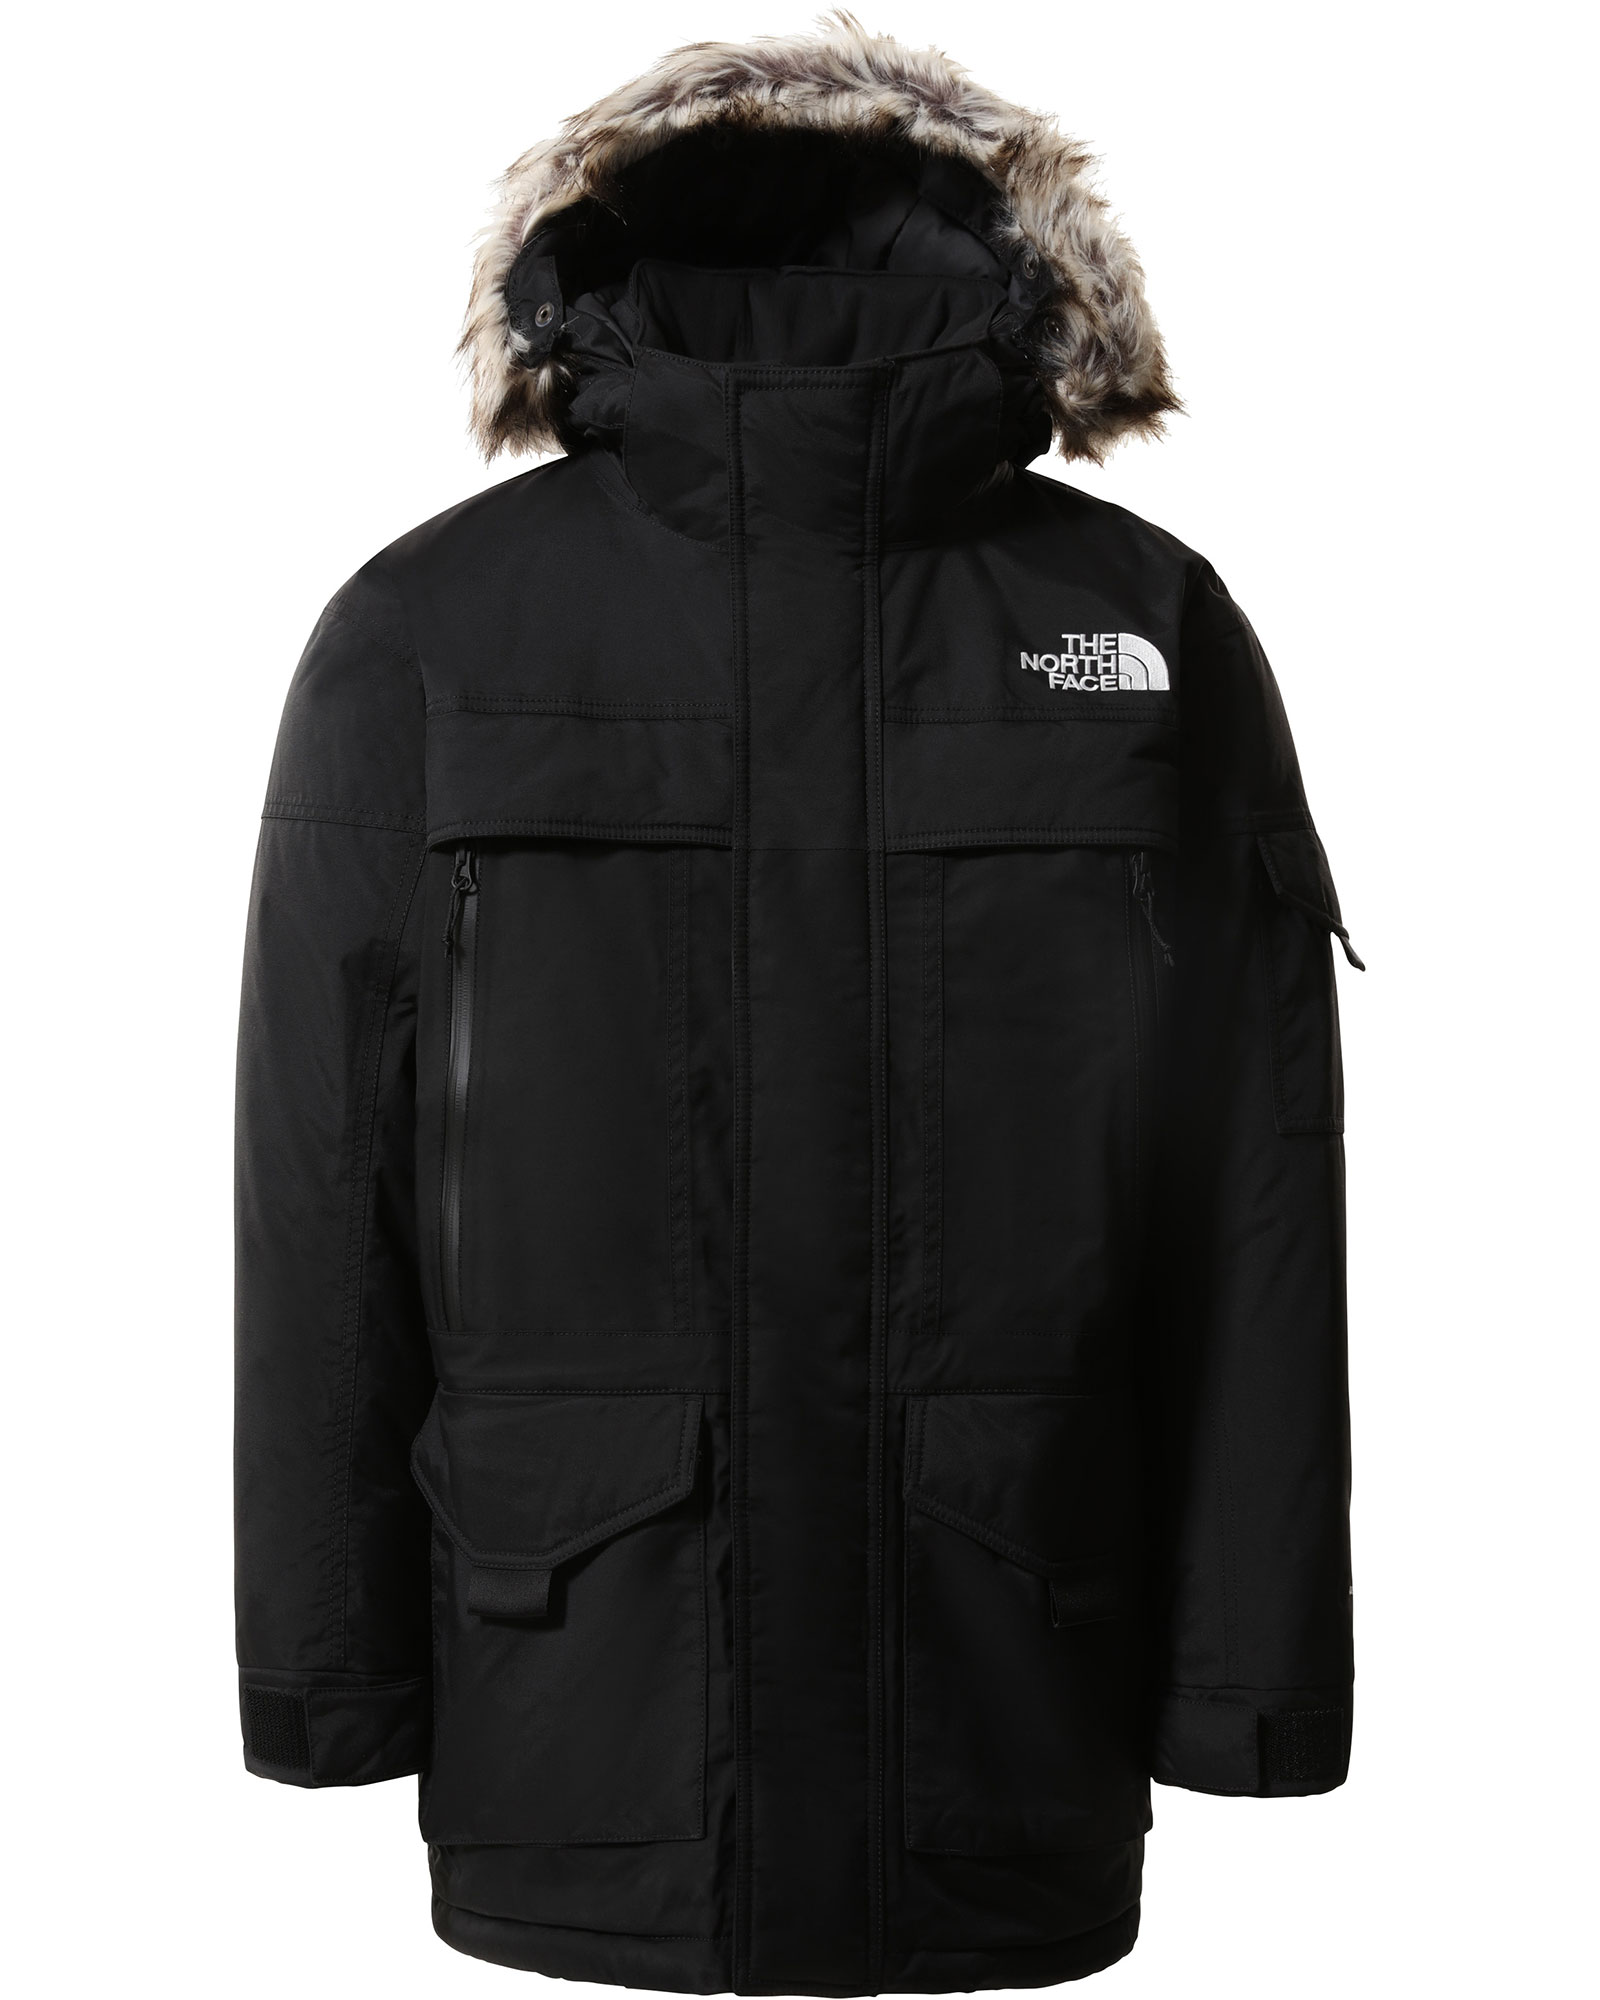 The North Face McMurdo 2 Men’s Parka Jacket - TNF Black/TNF White Logo XL